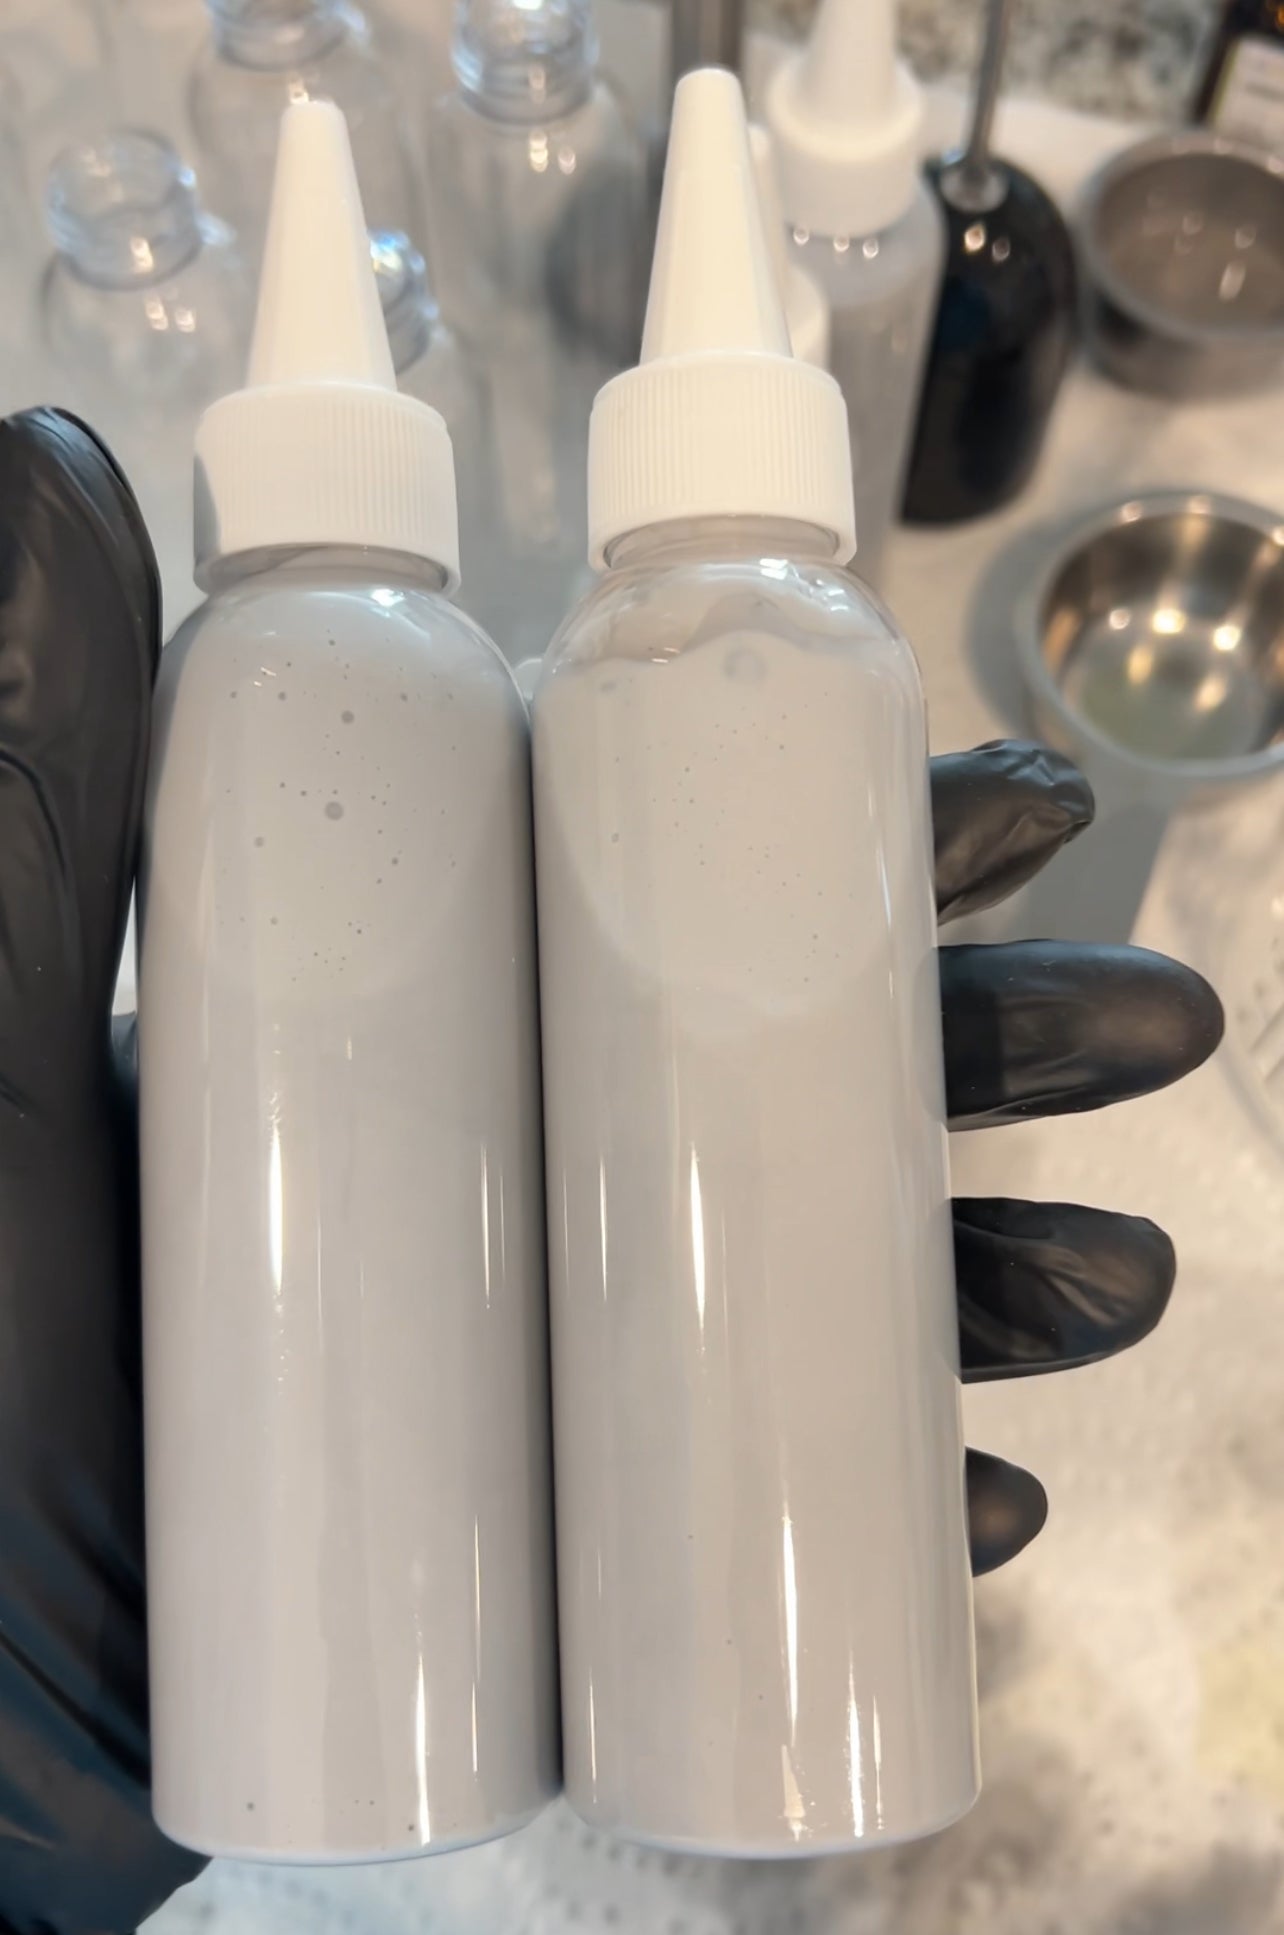 [NEW] Fresh Start Scalp Micro-Biome Restorative Pre-Wash Detox